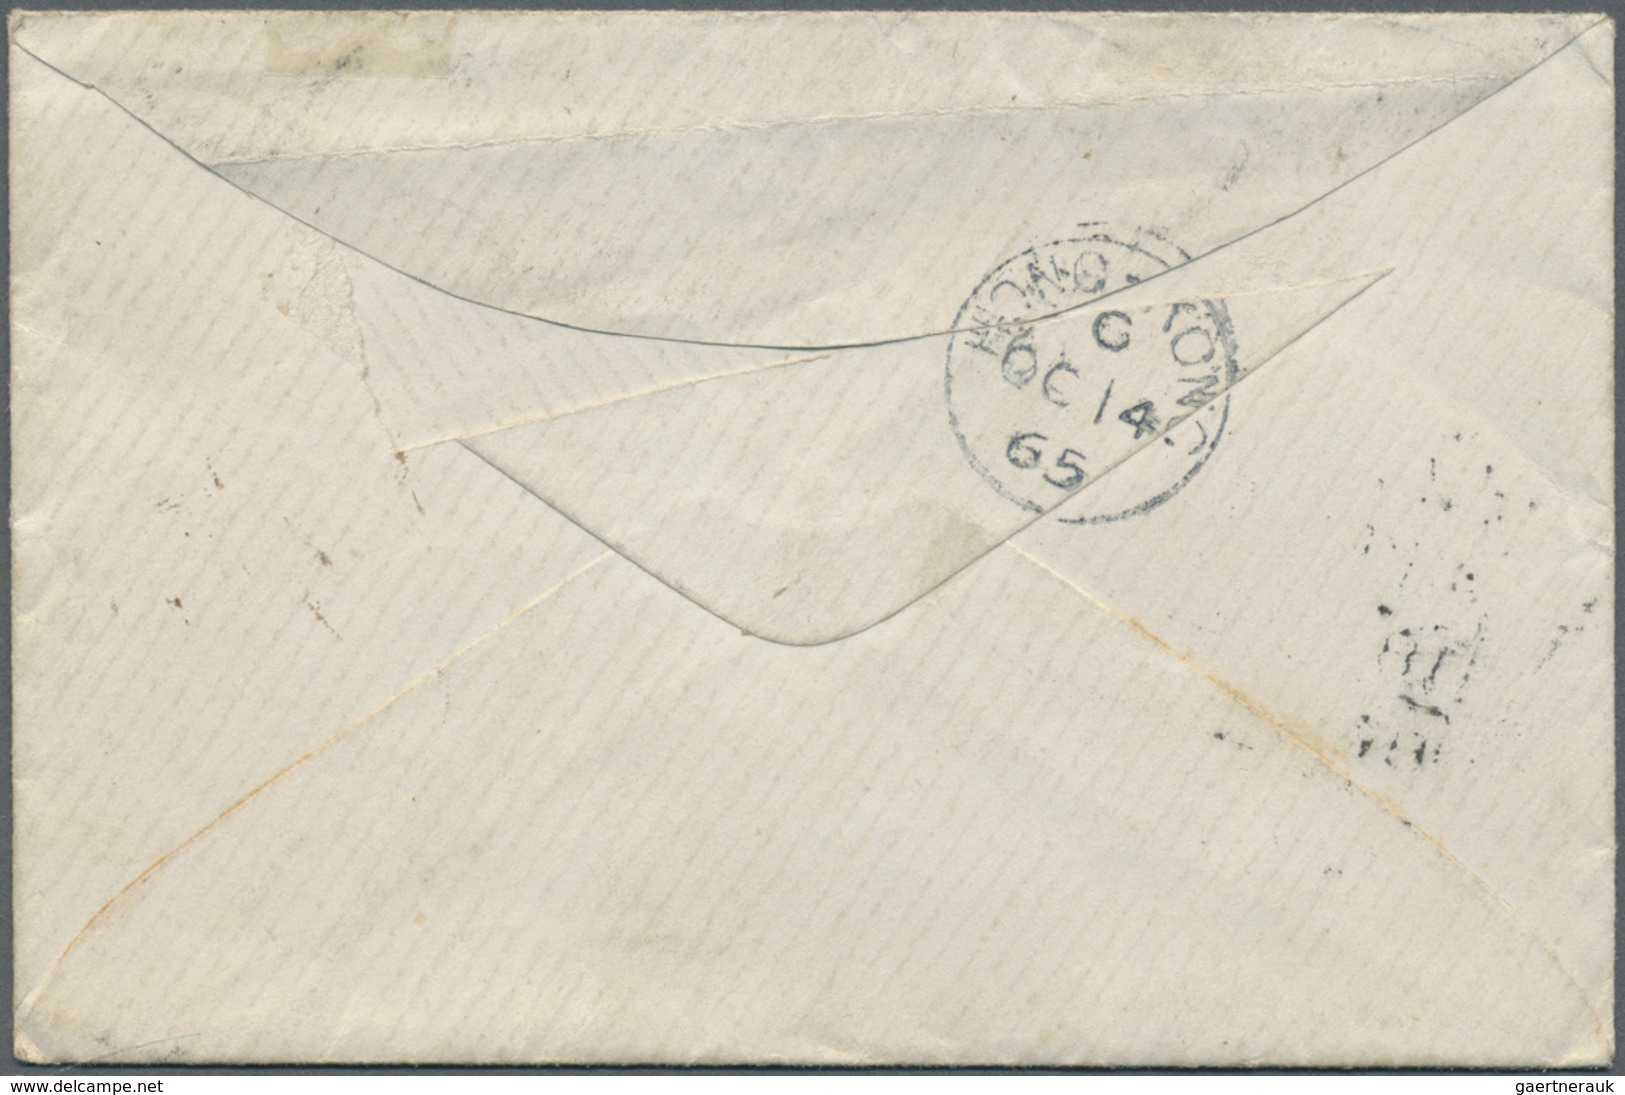 Br Singapur: 1865. Stampless Envelope Addressed To Yokohama, Japan Cancelled By Hong Kong/C Date Stamp - Singapore (...-1959)